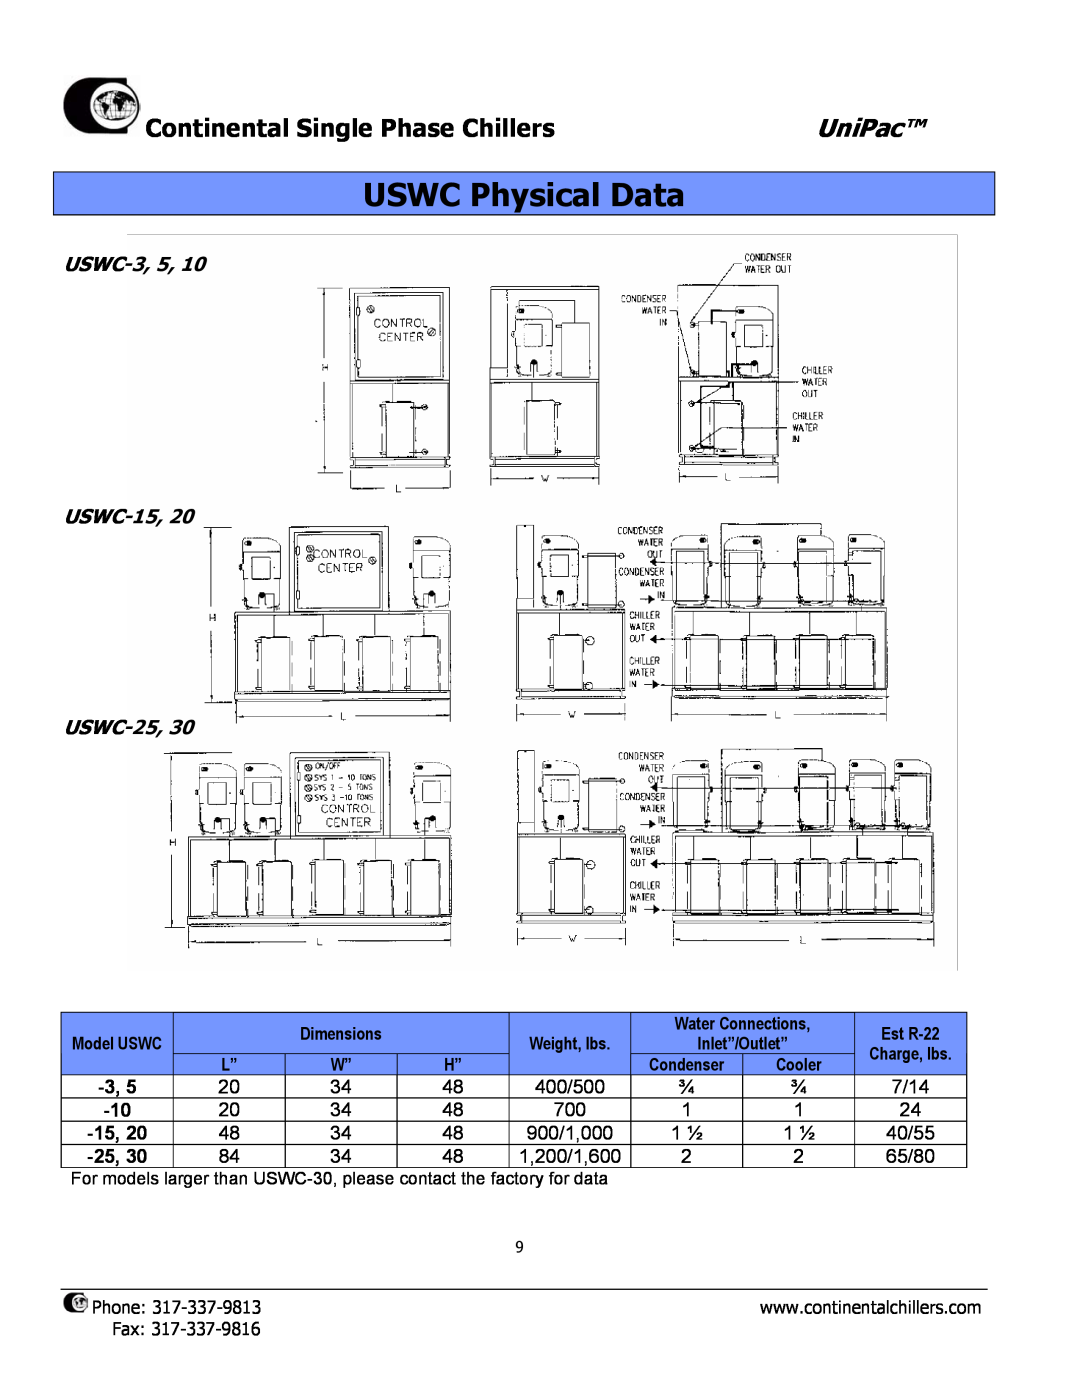 Continental USC-20, USAC-8 USWC Physical Data, Continental Single Phase Chillers, UniPac, USWC-3,5, USWC-15,20 USWC-25,30 